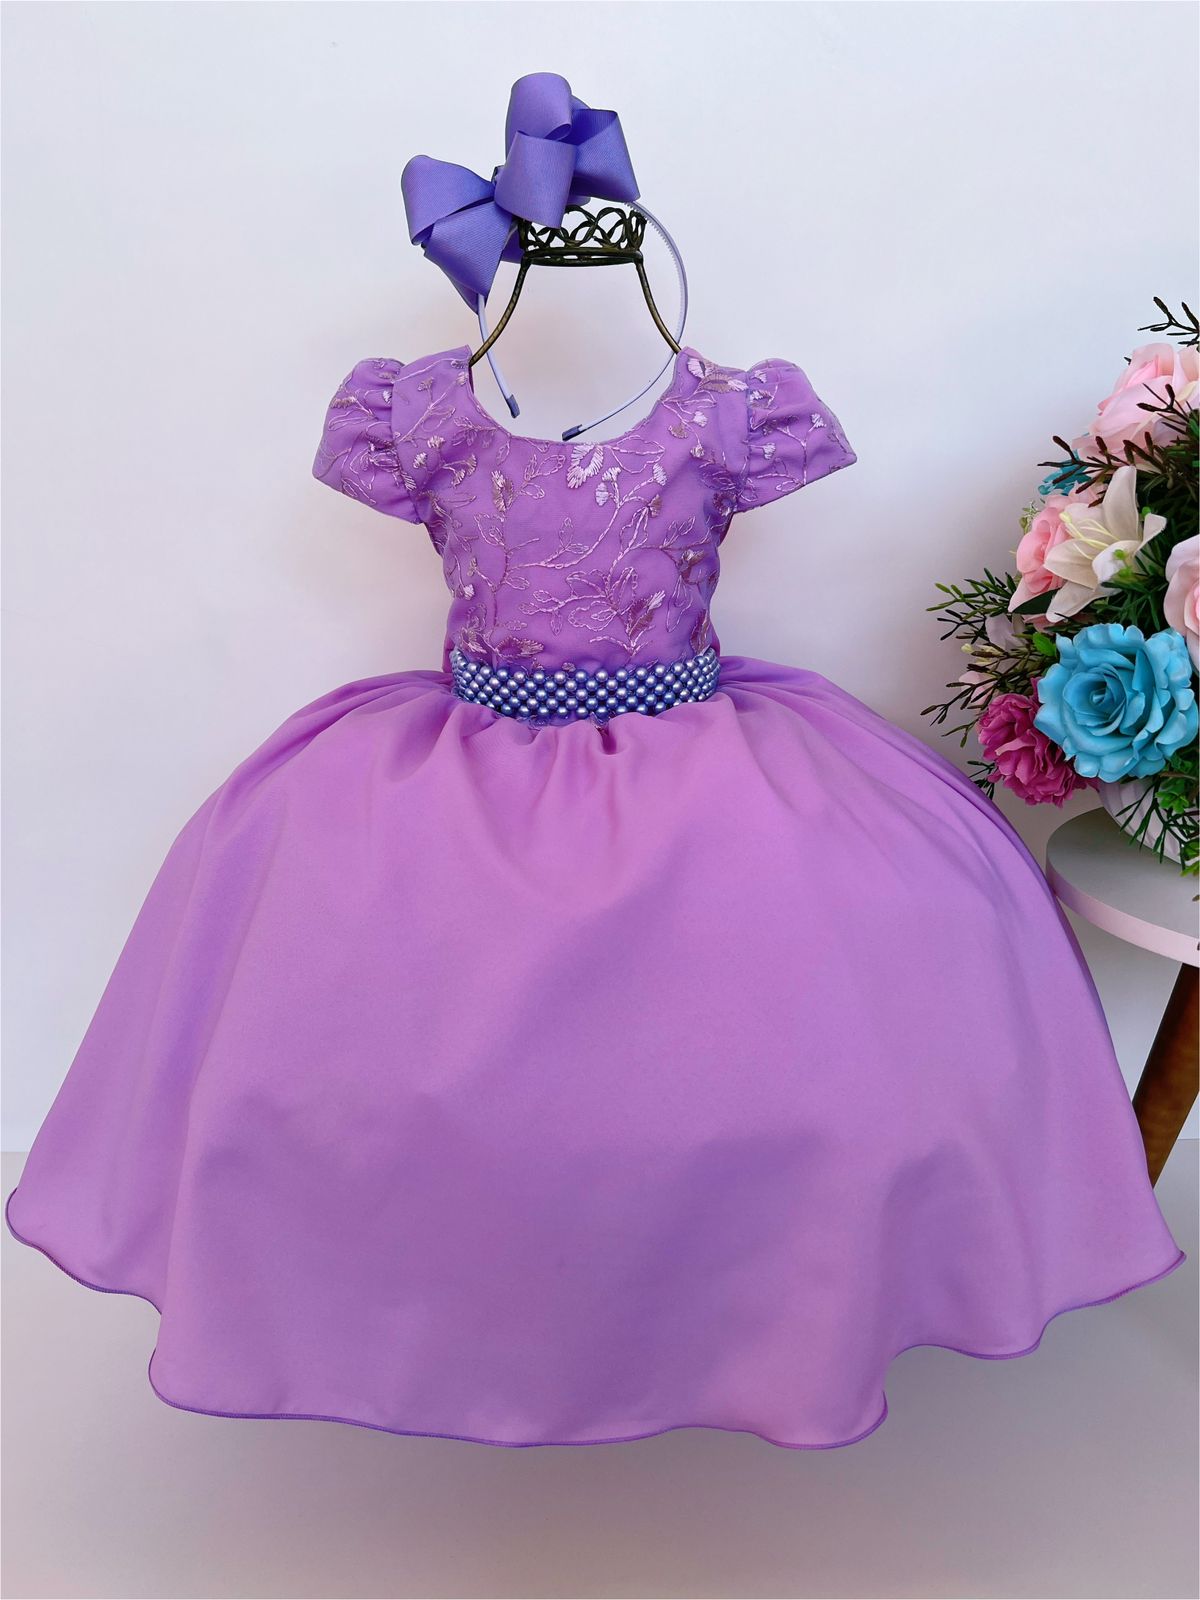 Vestido Infantil Lilás C/ Renda e Cinto de Pérolas Luxo